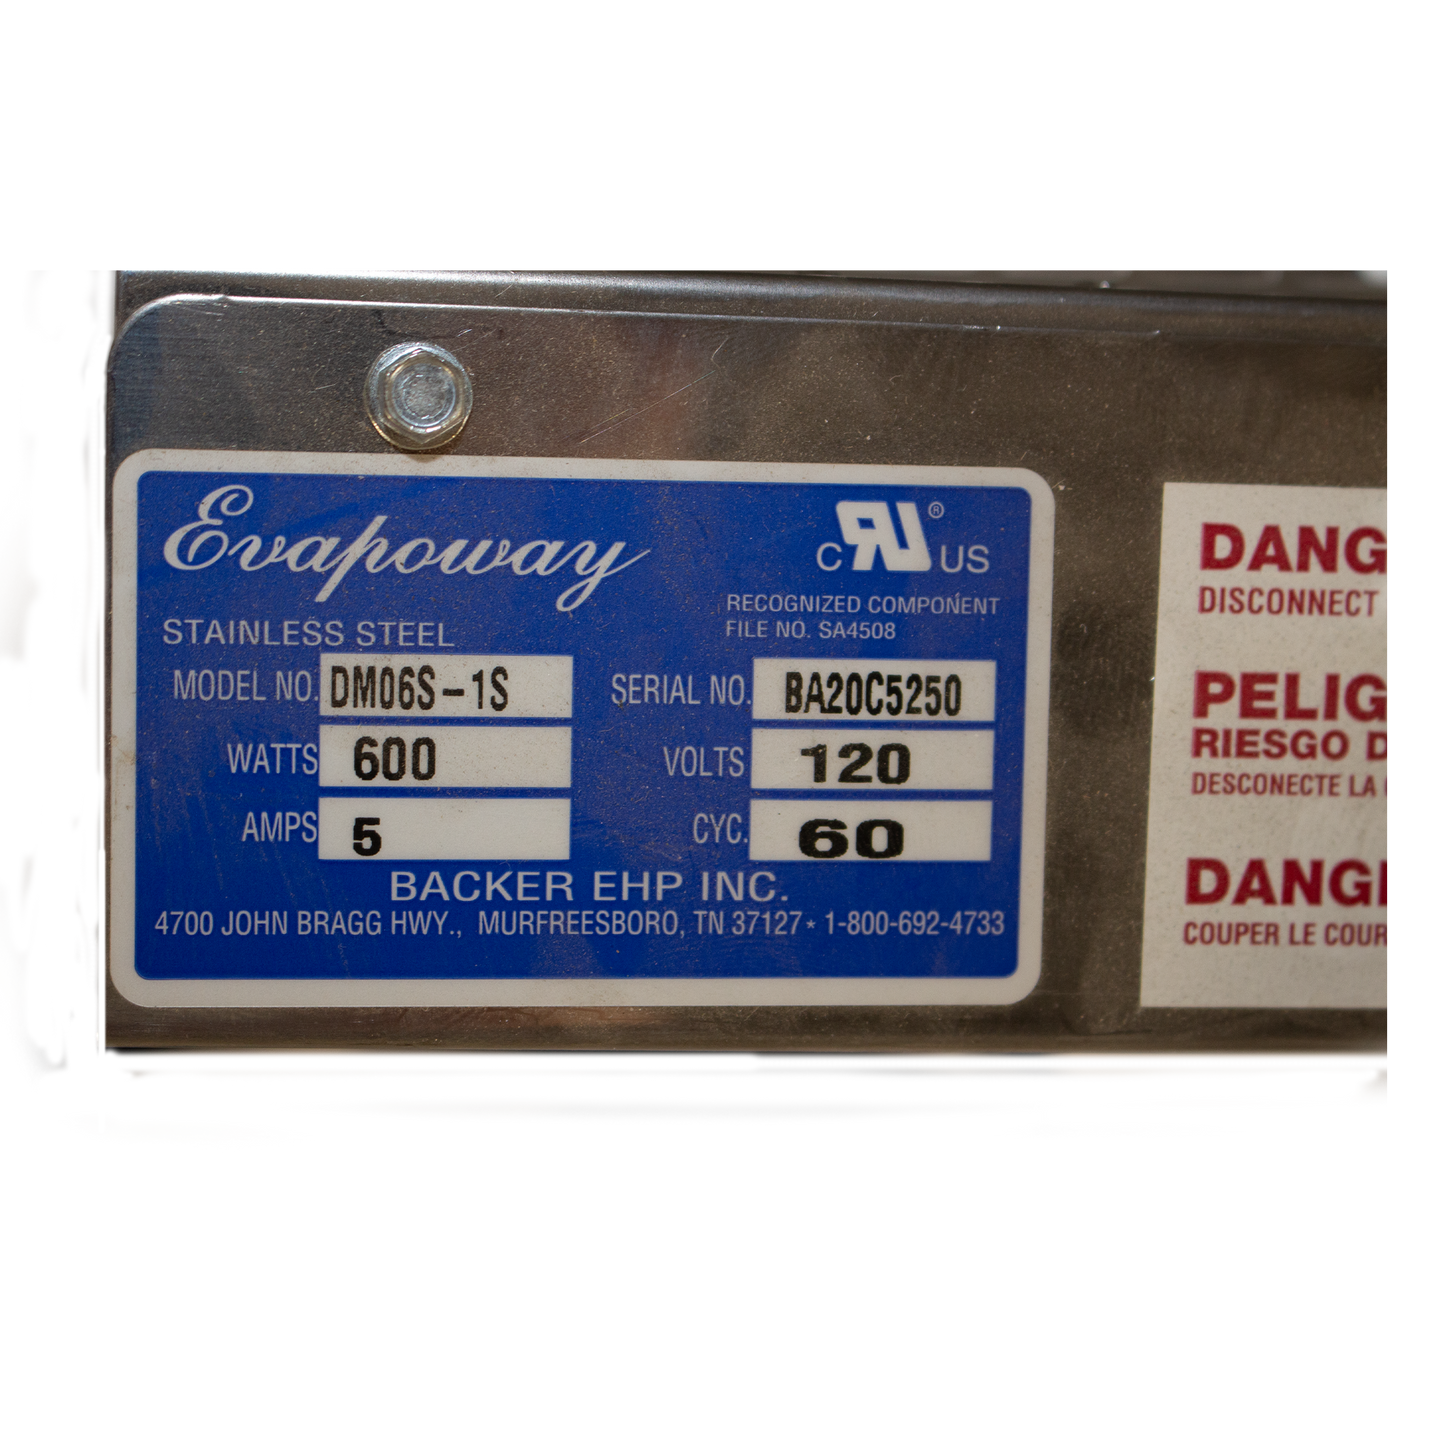 dm06S-1s-evapoway-condensate-pan-serial-number-tag